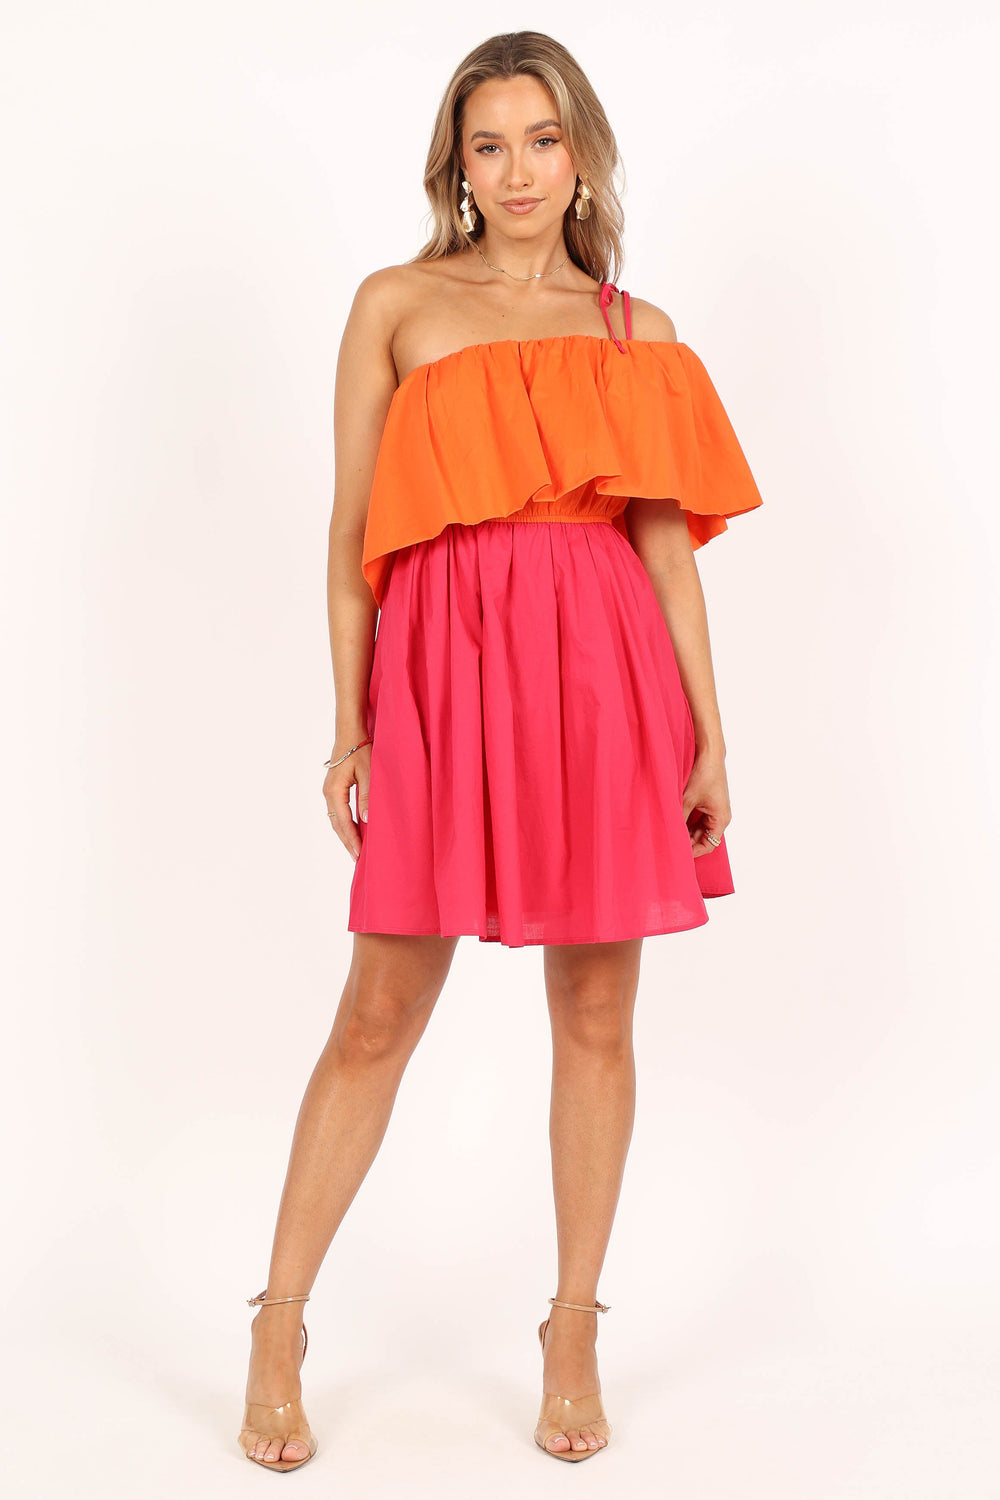 USA - Shoulder Dress & Pup Maeva Mini Petal Pink/Orange - One